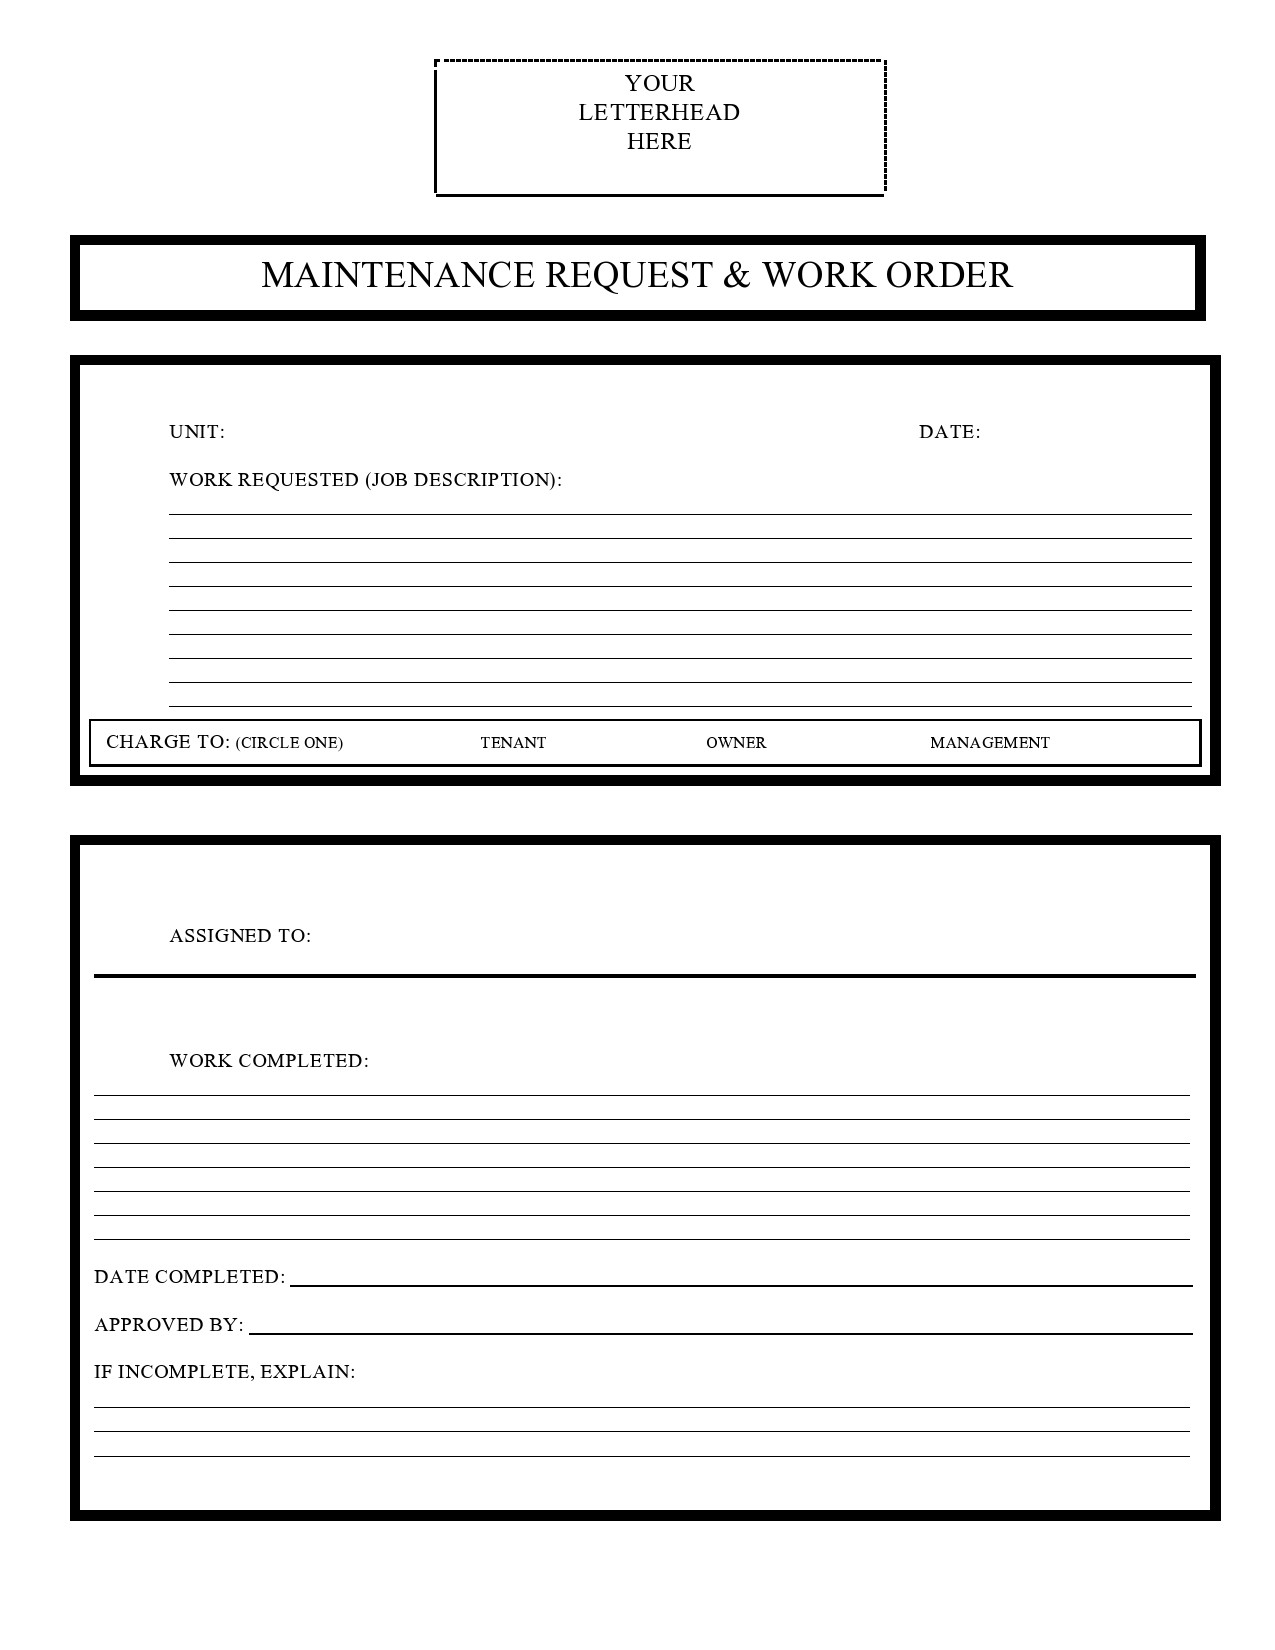 Free maintenance request form 20